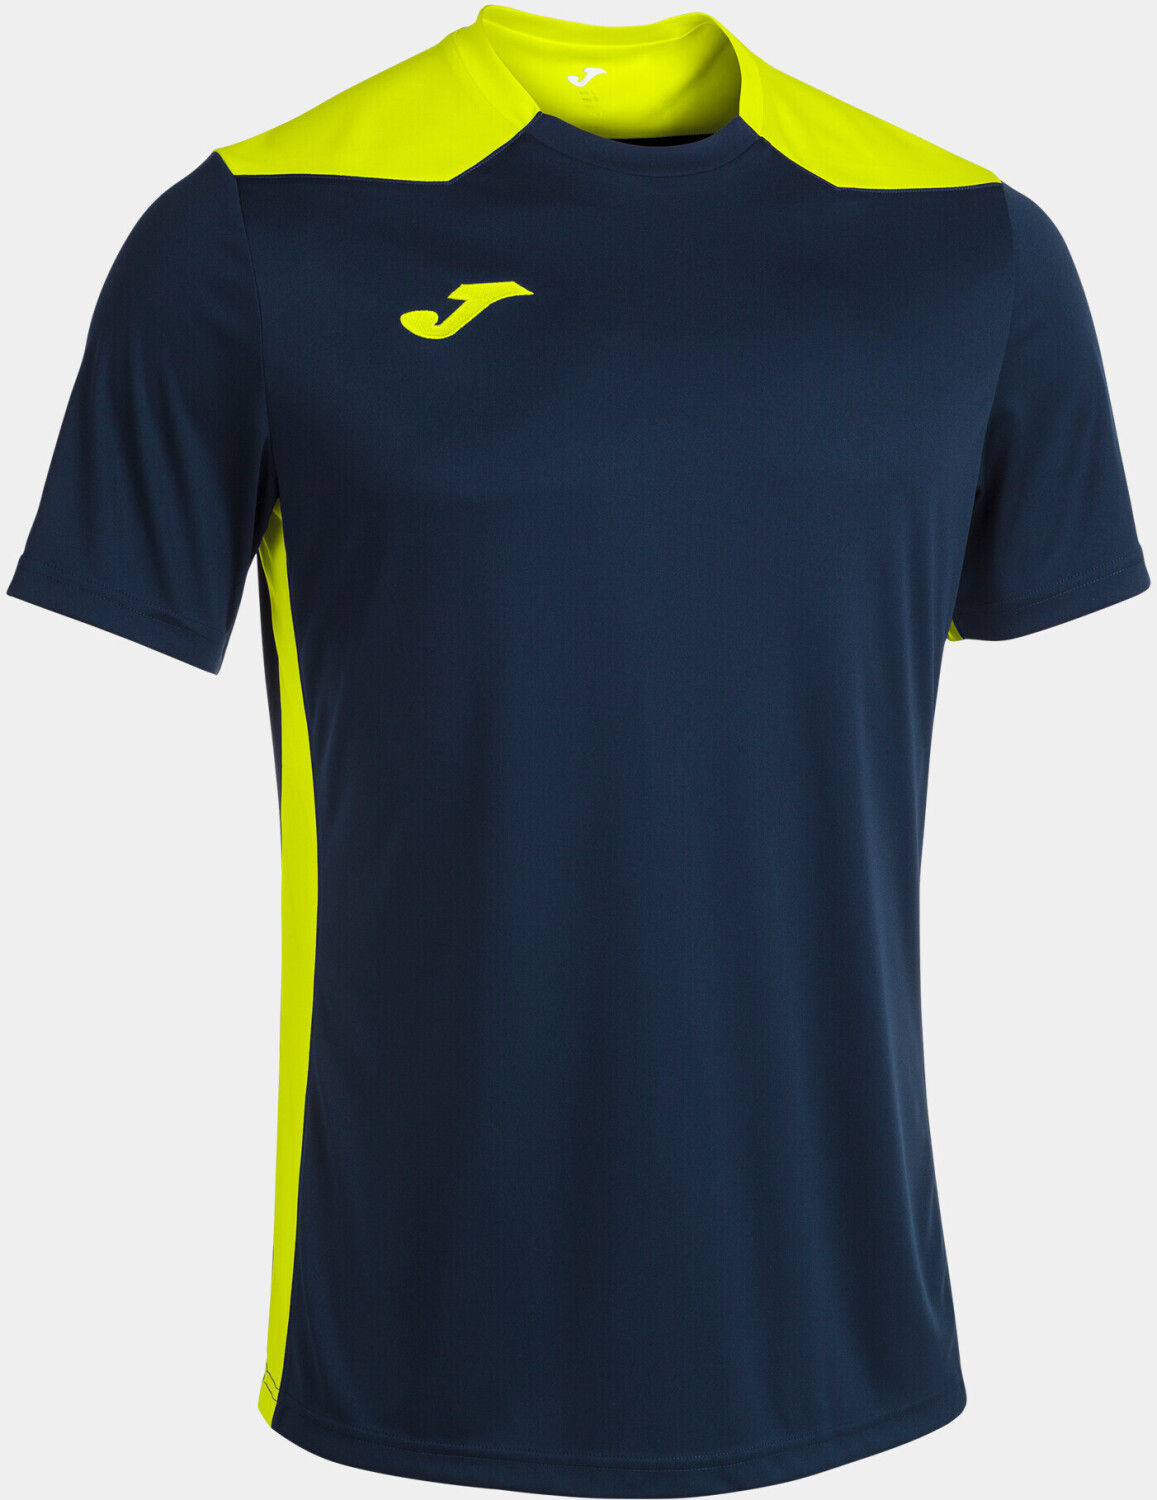 Photos - Football Kit Joma Championship VI Shirt Youth  marine blue/neon yellow (101822k)